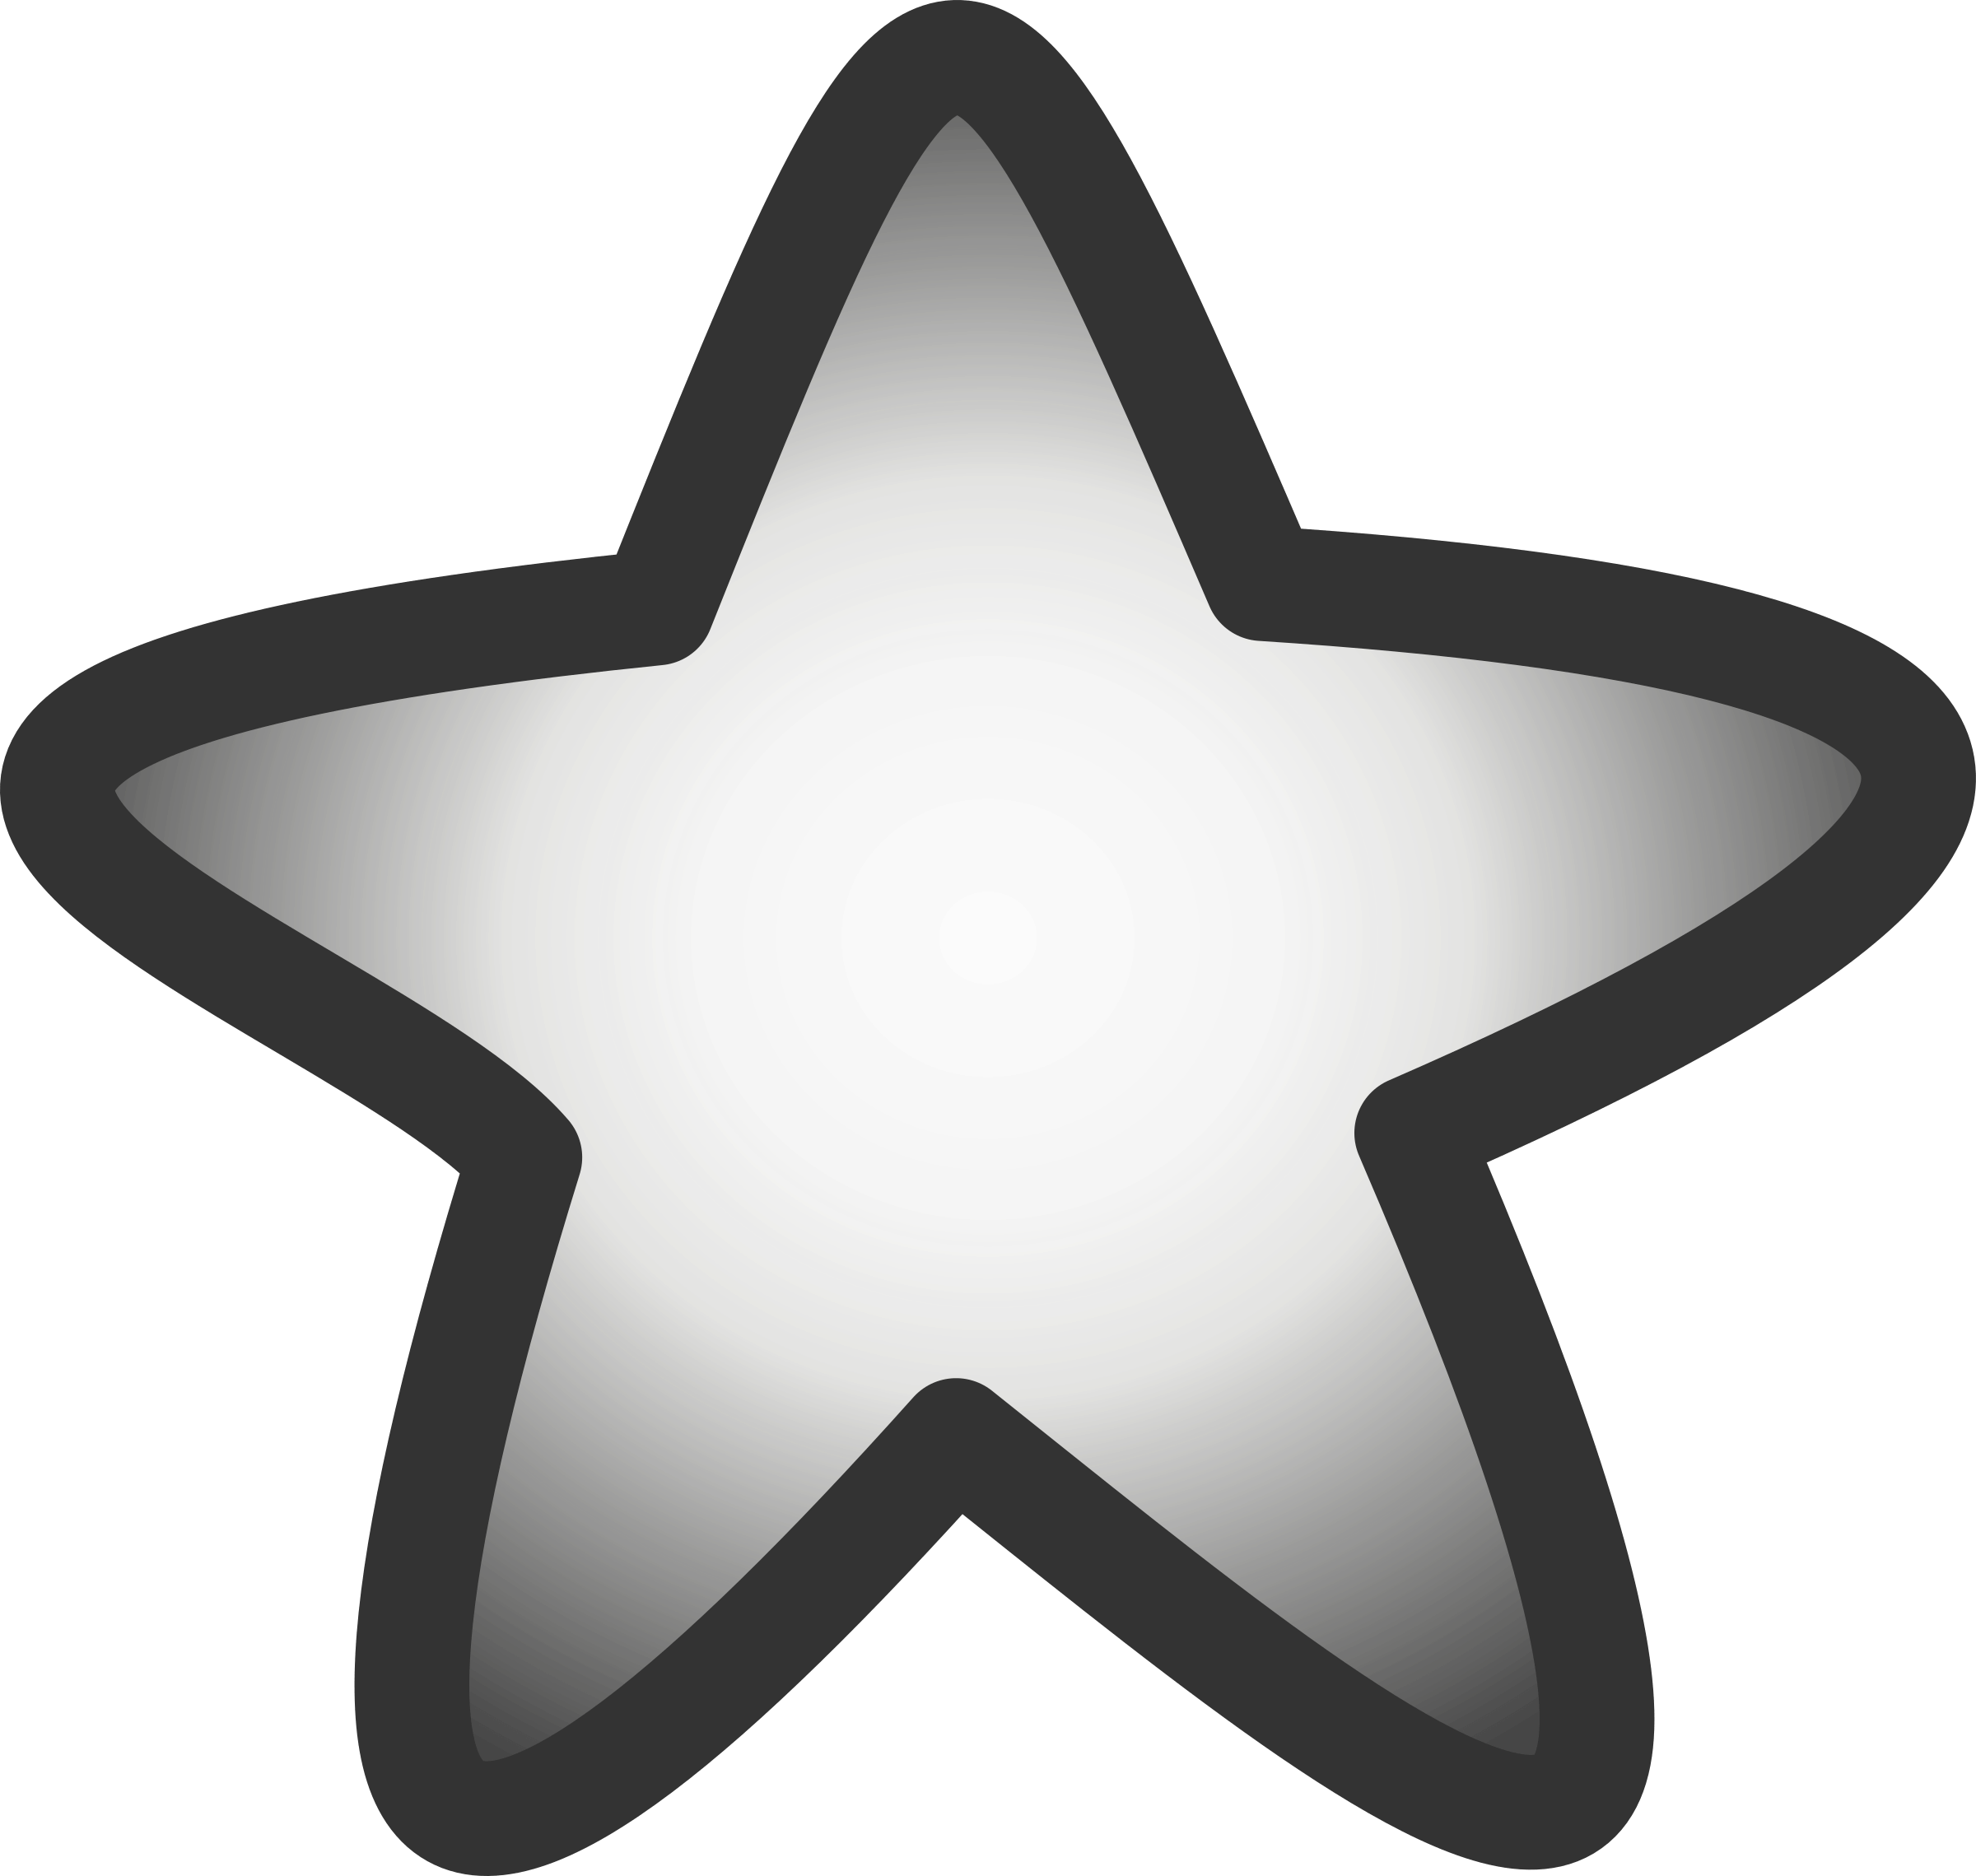 Black and White Star Logo - Free Silver Star Cliparts, Download Free Clip Art, Free Clip Art on ...